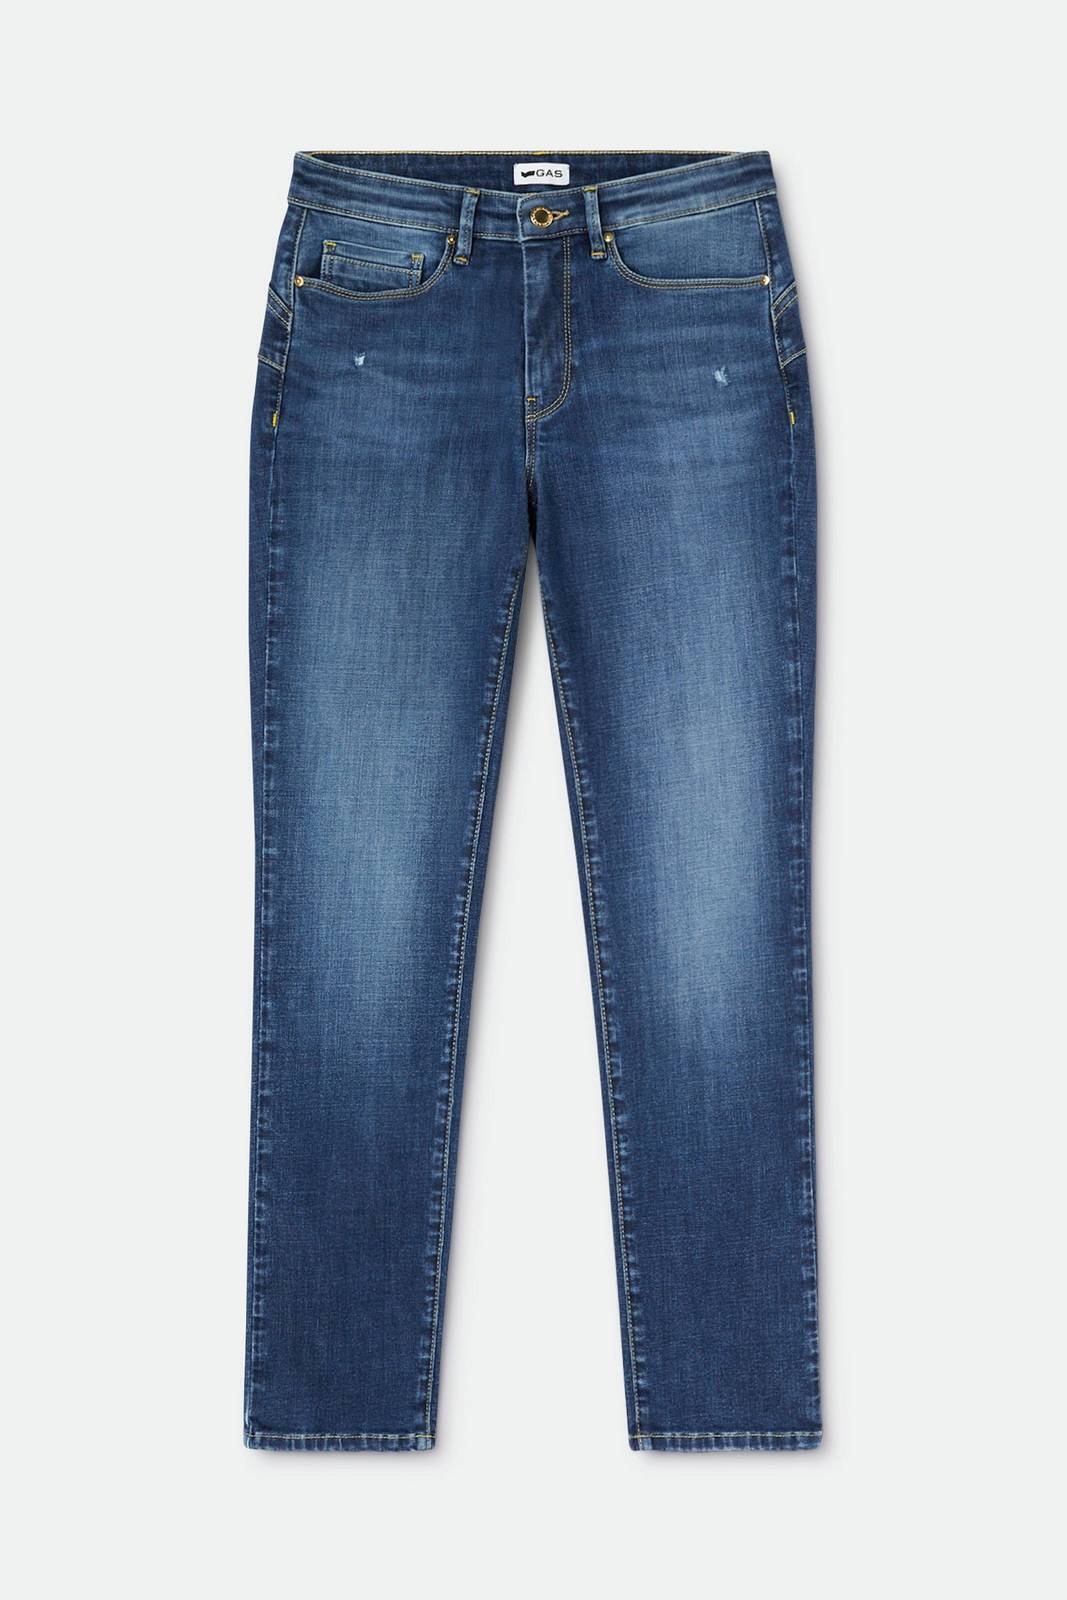 Image of Gas Jeans Denim Britty Up Z - Jeans Slim Fit A Vita Alta Jeans - Taglia 26-40